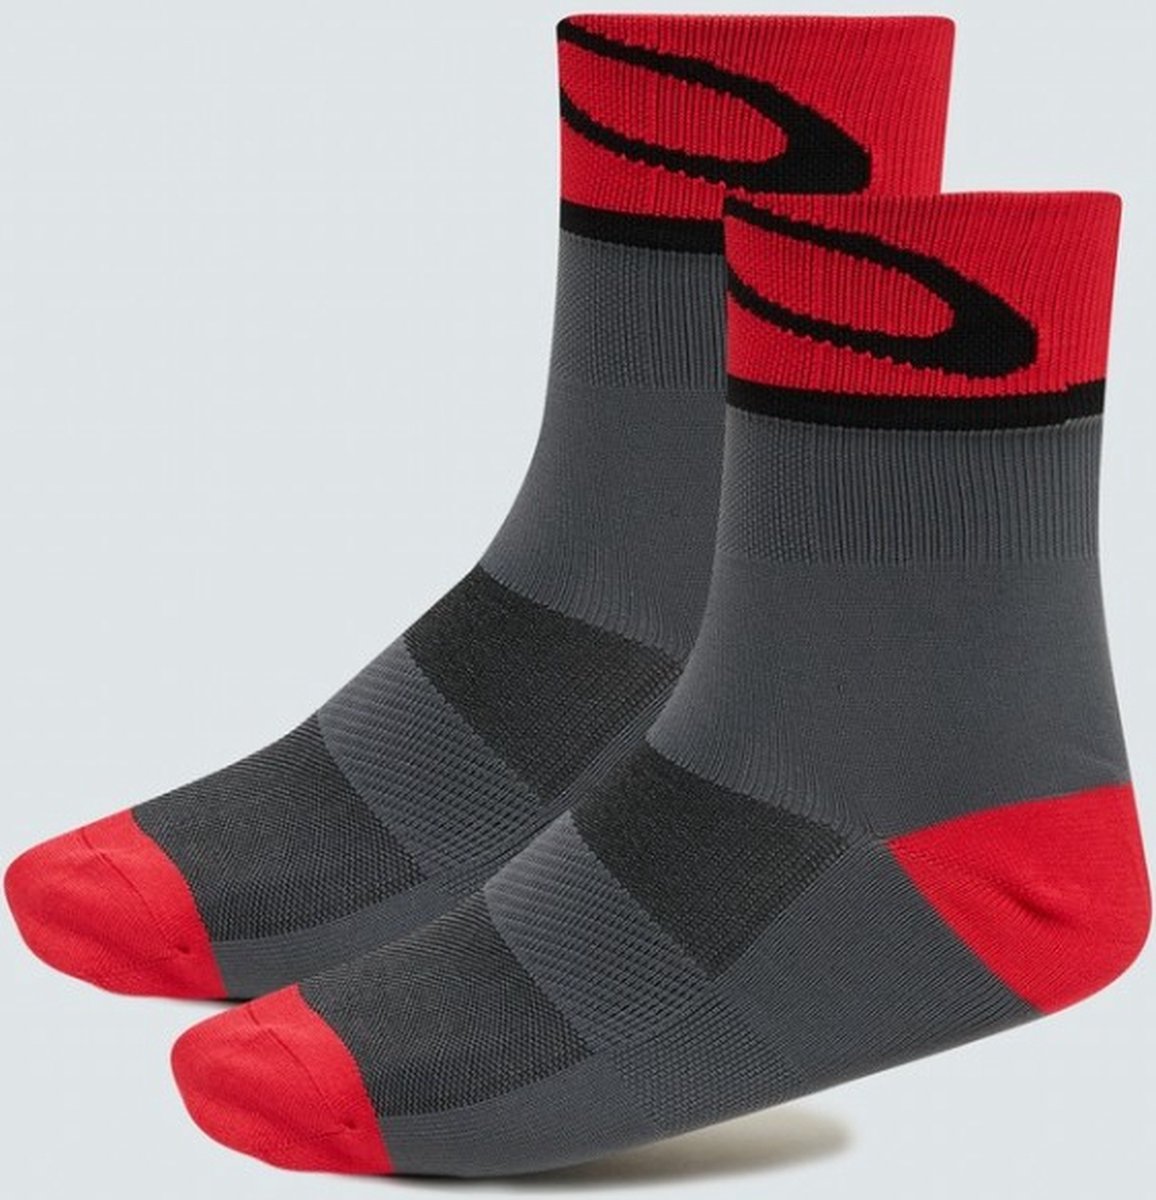 Oakley Socks 3.0/ Uniform Gray - FOS900165-25N